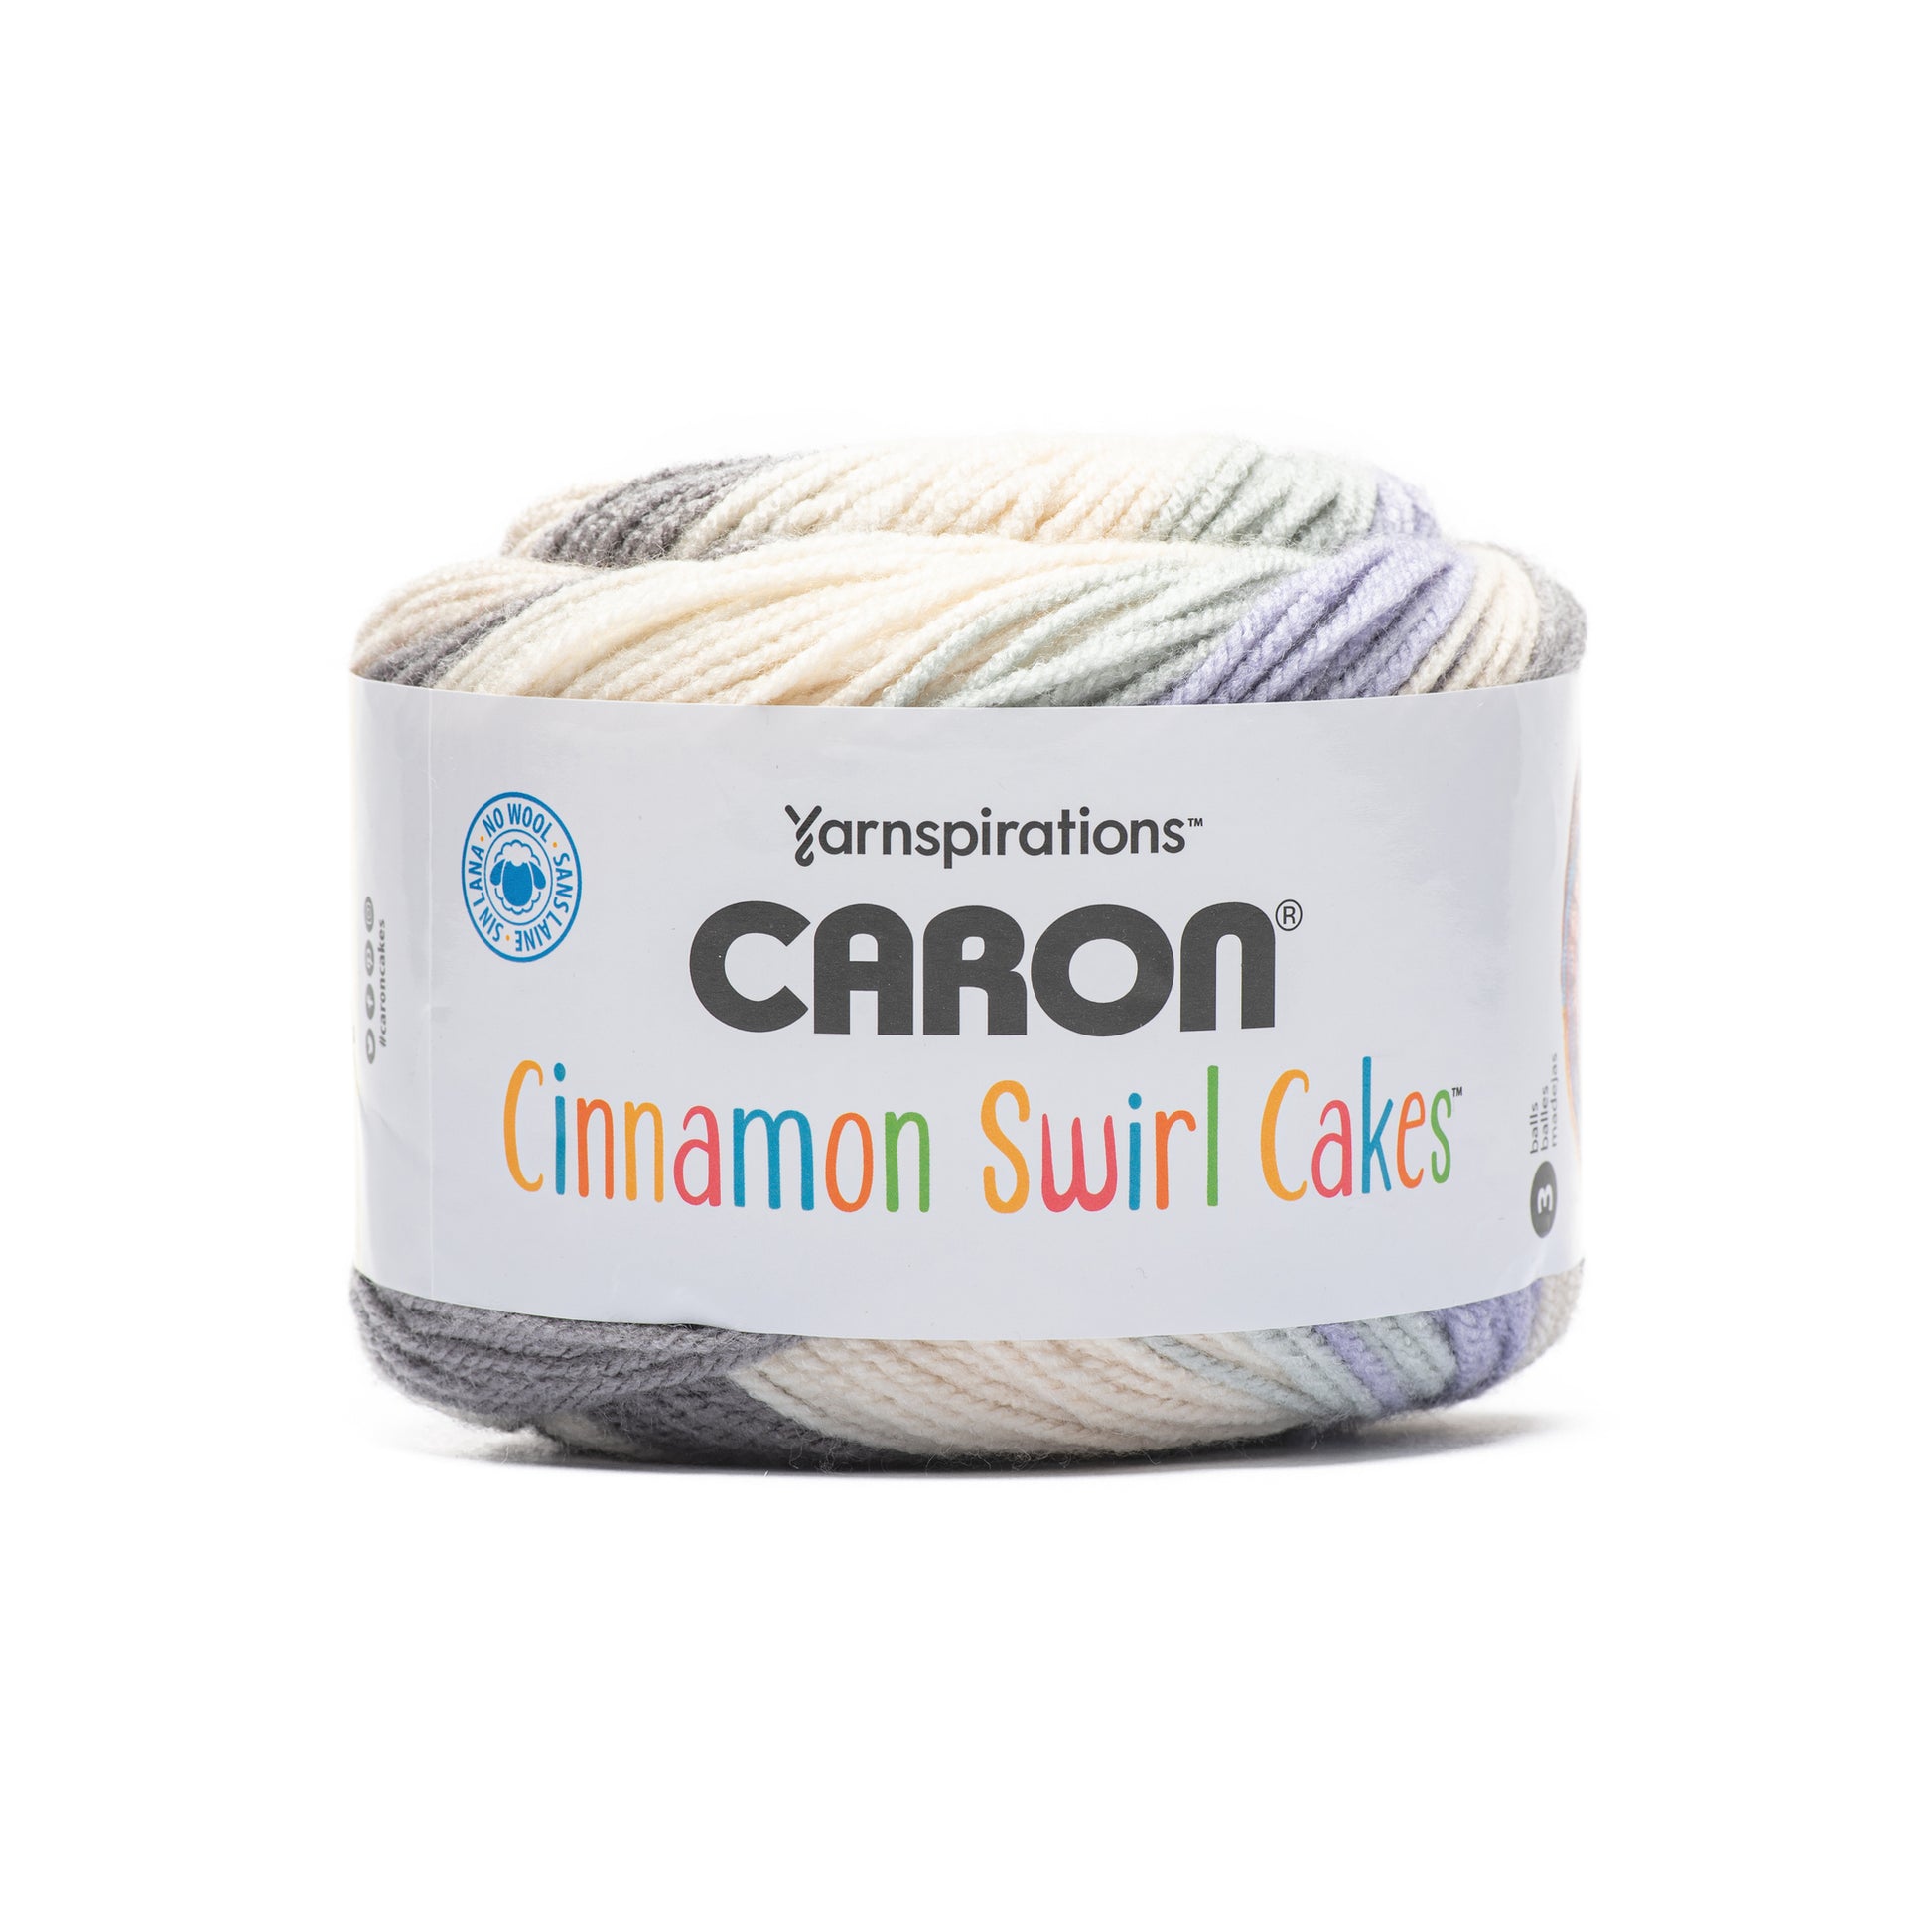 Caron Cinnamon Swirl Cakes Yarn - Retailer Exclusive